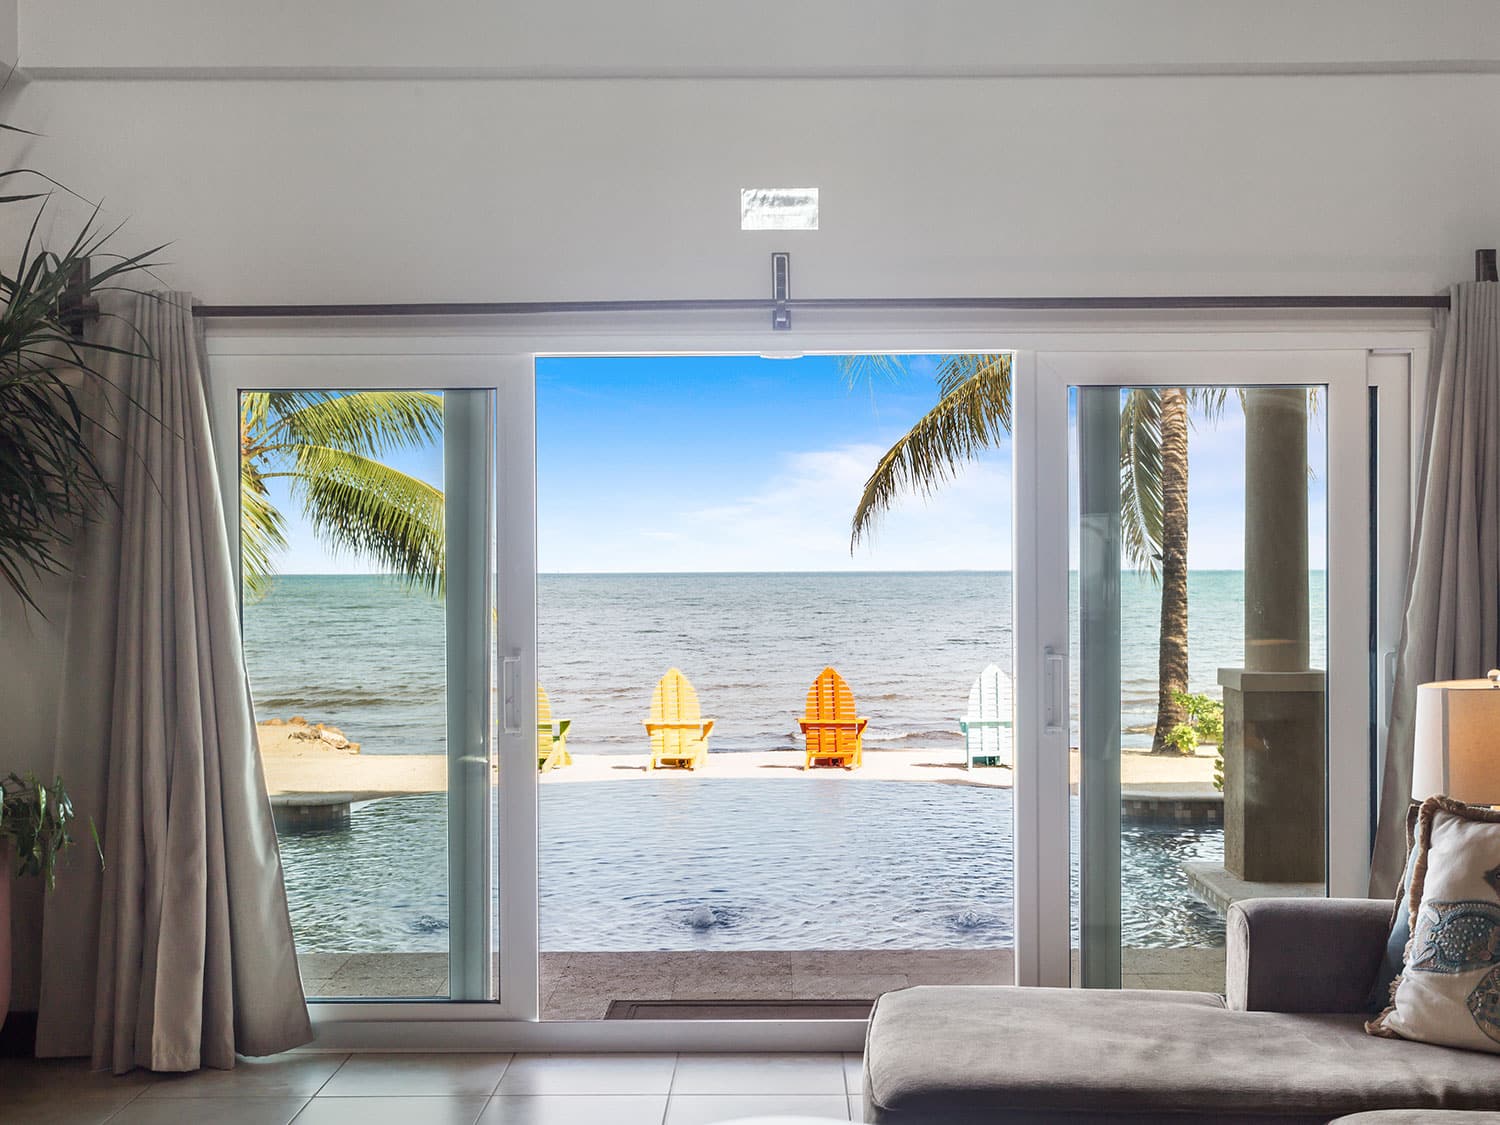 A large window overlooked a beach at an island bay resort villa.